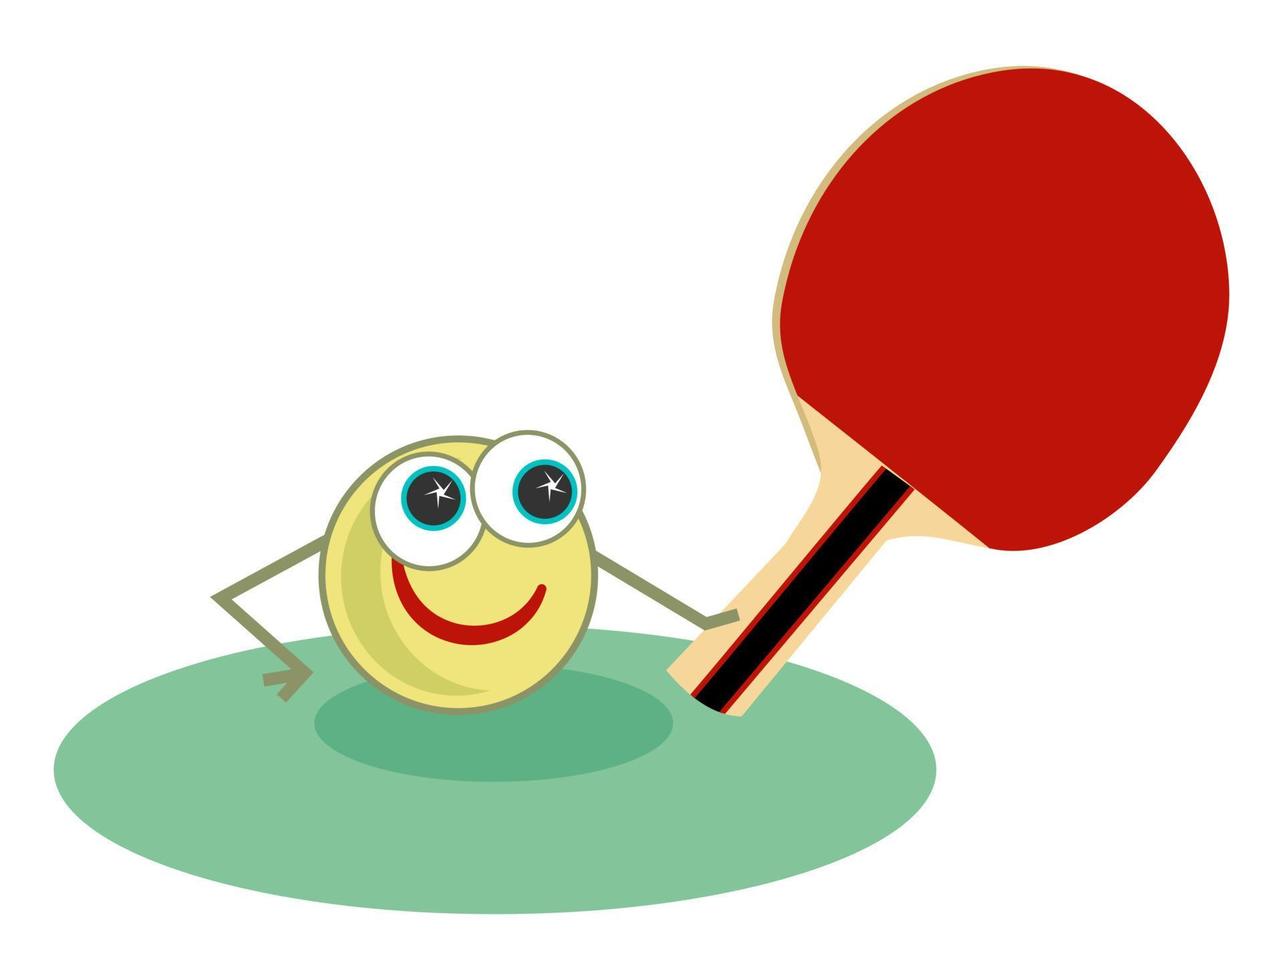 Pelota de ping pong de divertidos dibujos animados jugando tenis de mesa vector